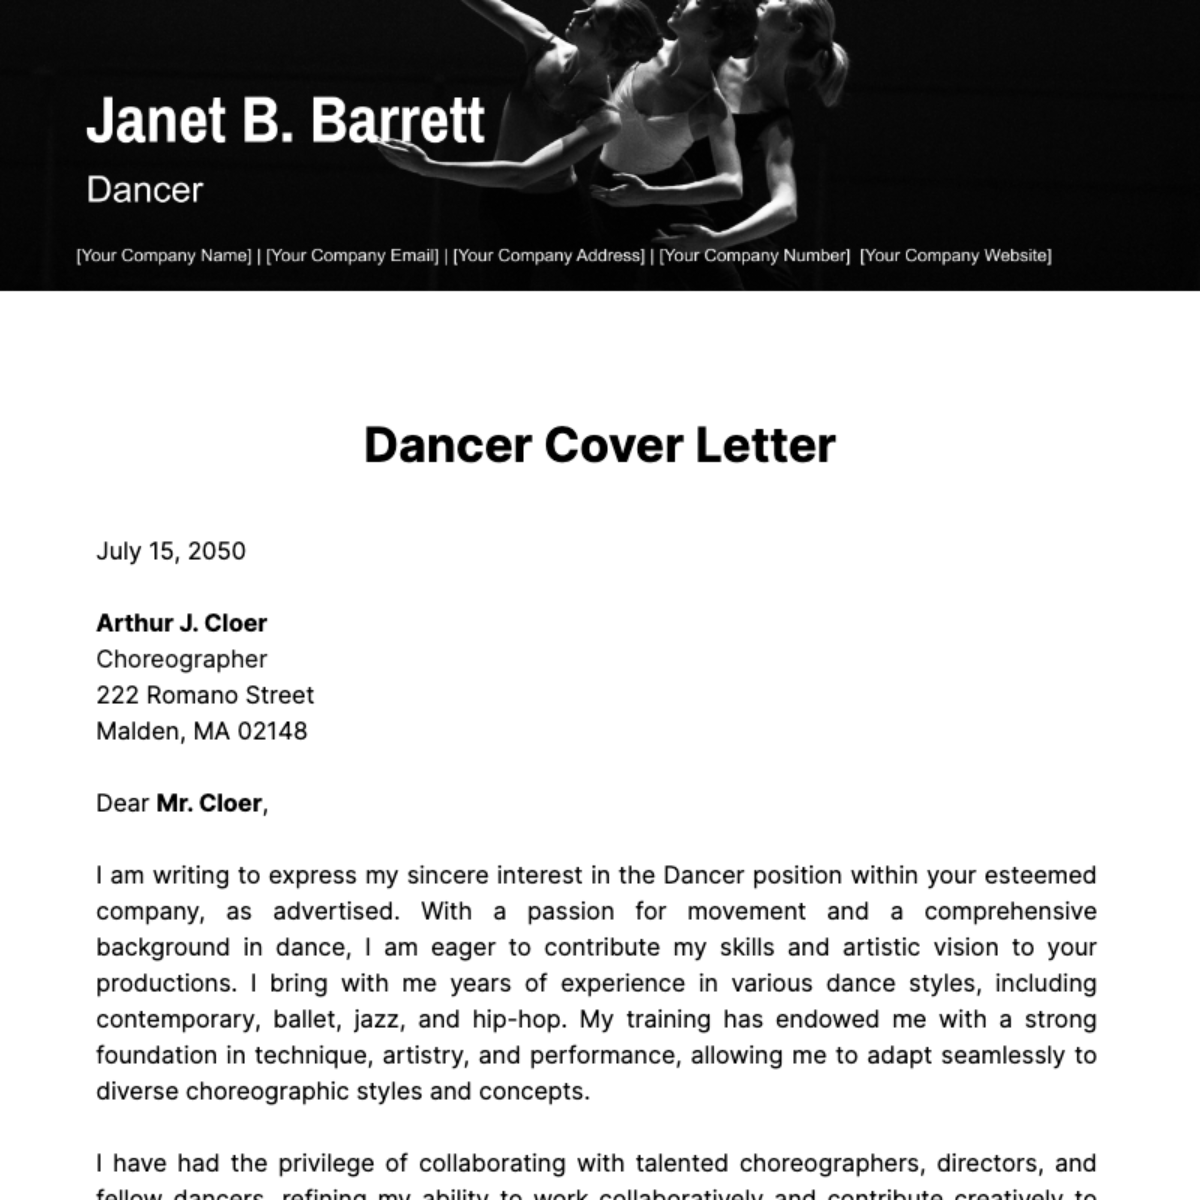 Dancer Cover Letter Template